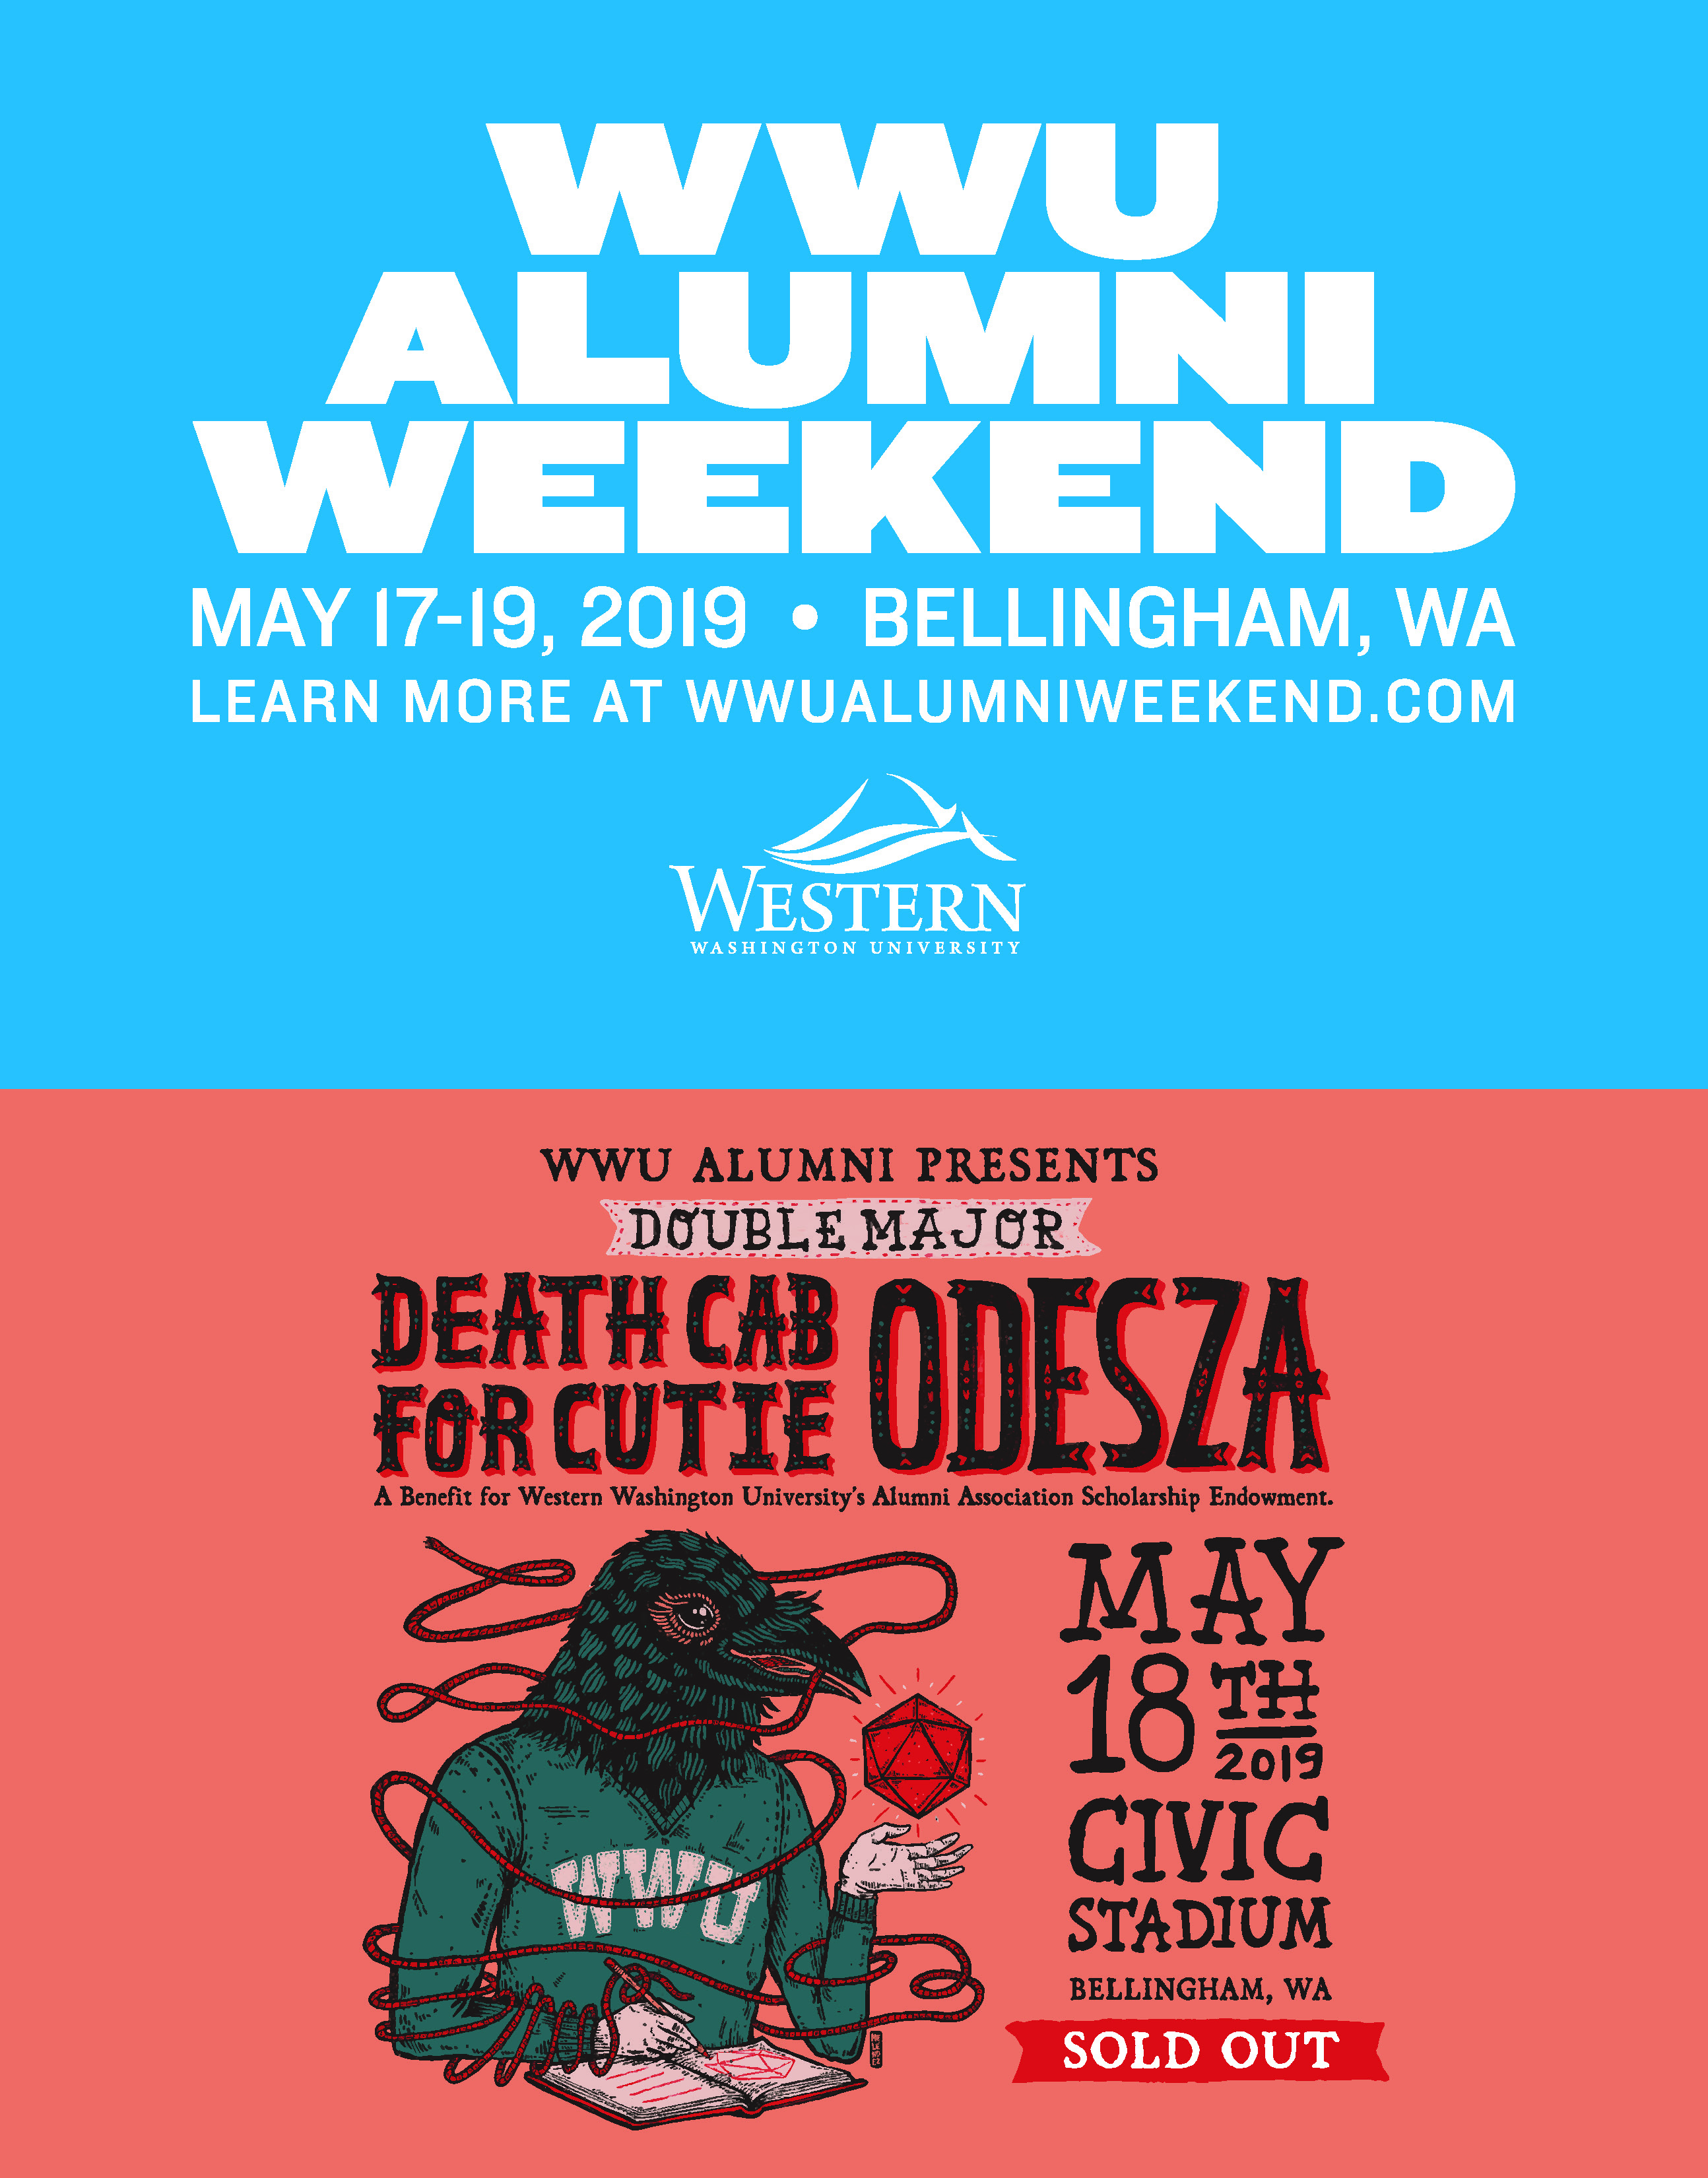 WWU Alumni Weekend May 17-19, 2019, Bellingham, wwualumniweekend.com, WWU Alumni Presents Double major Death Cab for Cutie, ODESZA, May 18, Civic Stadium, Bellingham, WA, Sold Out. 